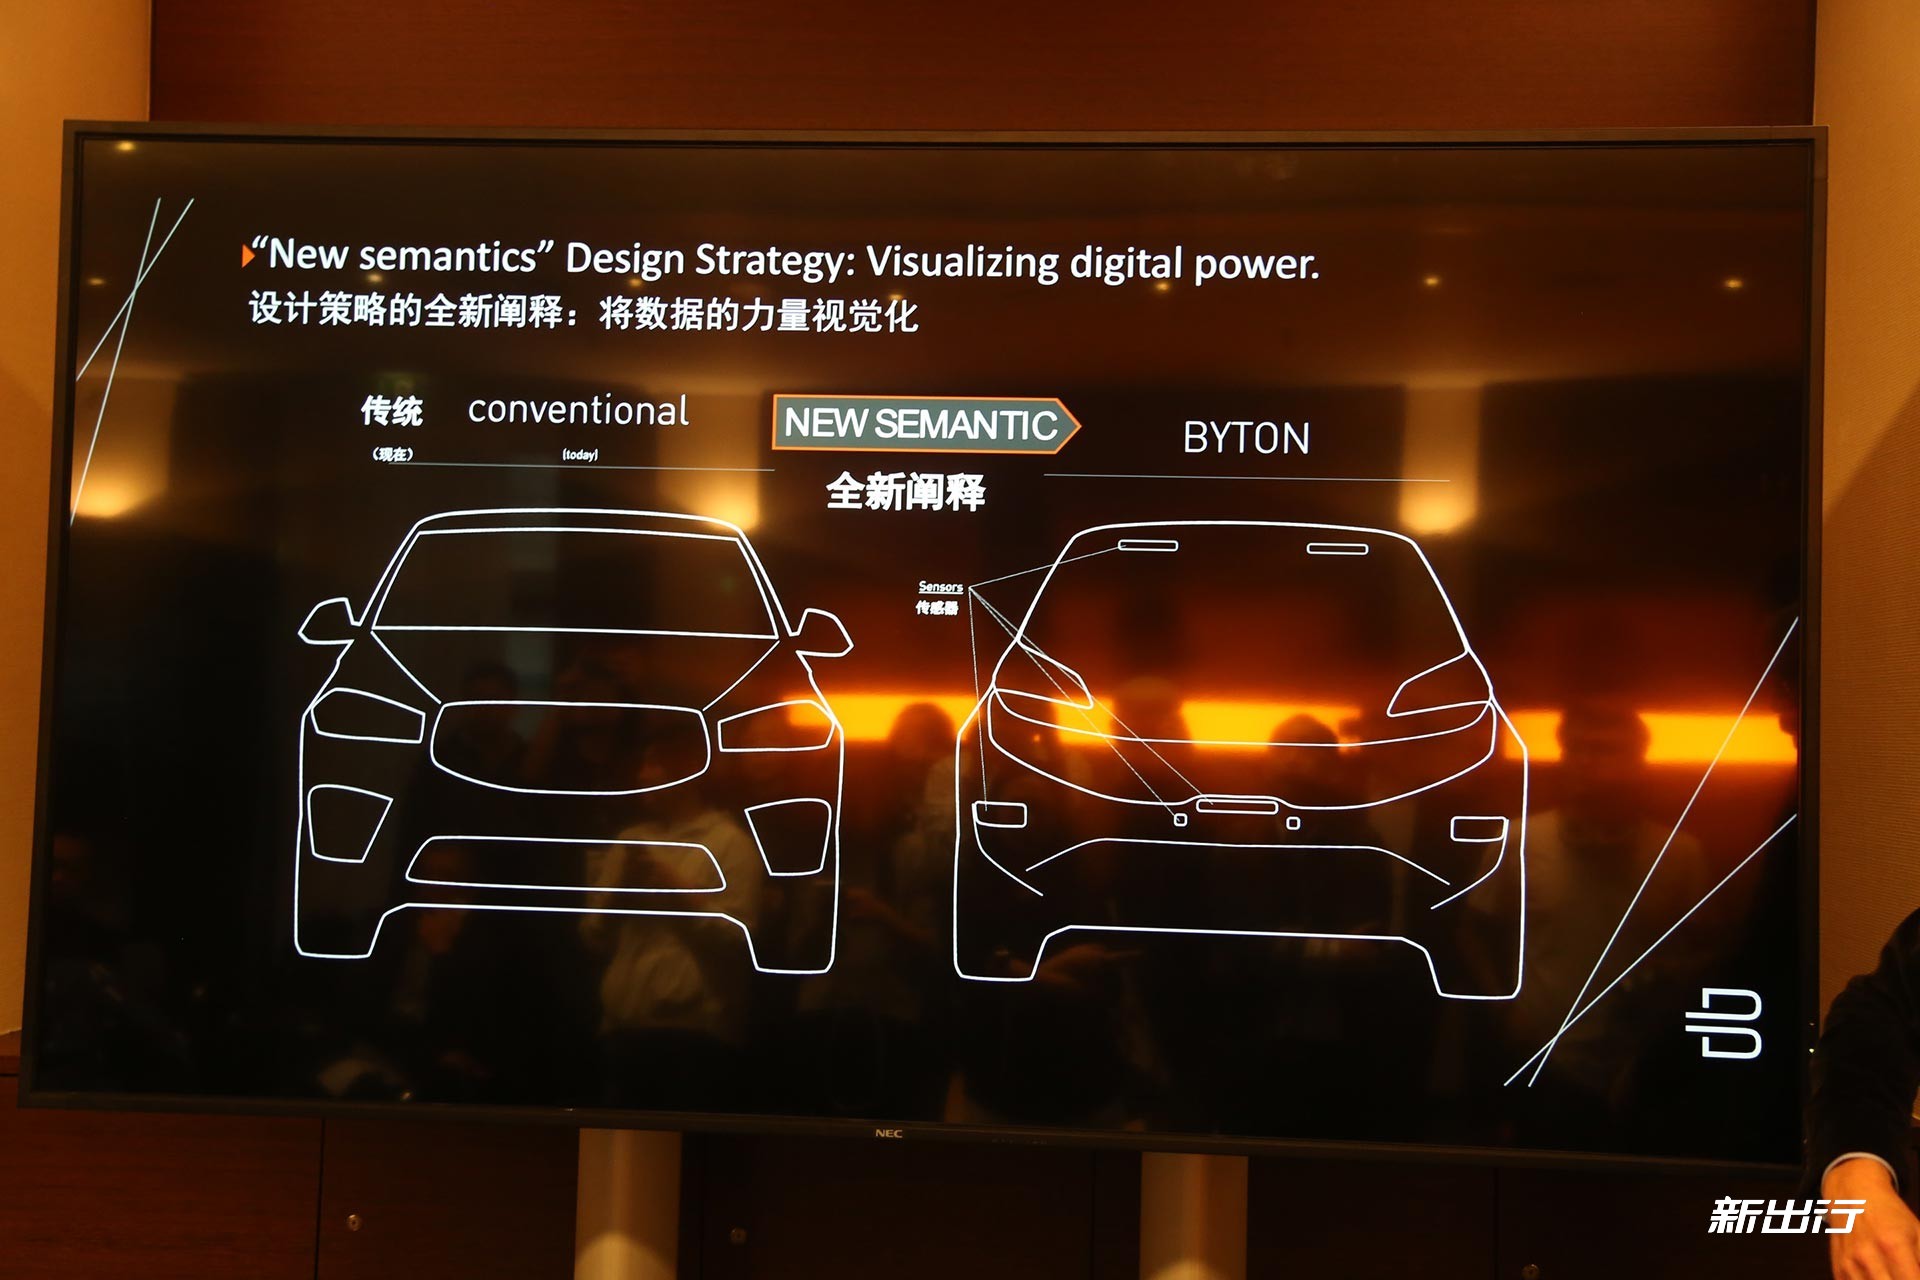 BYTON 概念车的智能表情设计可根据使用场景开启不同显示模式